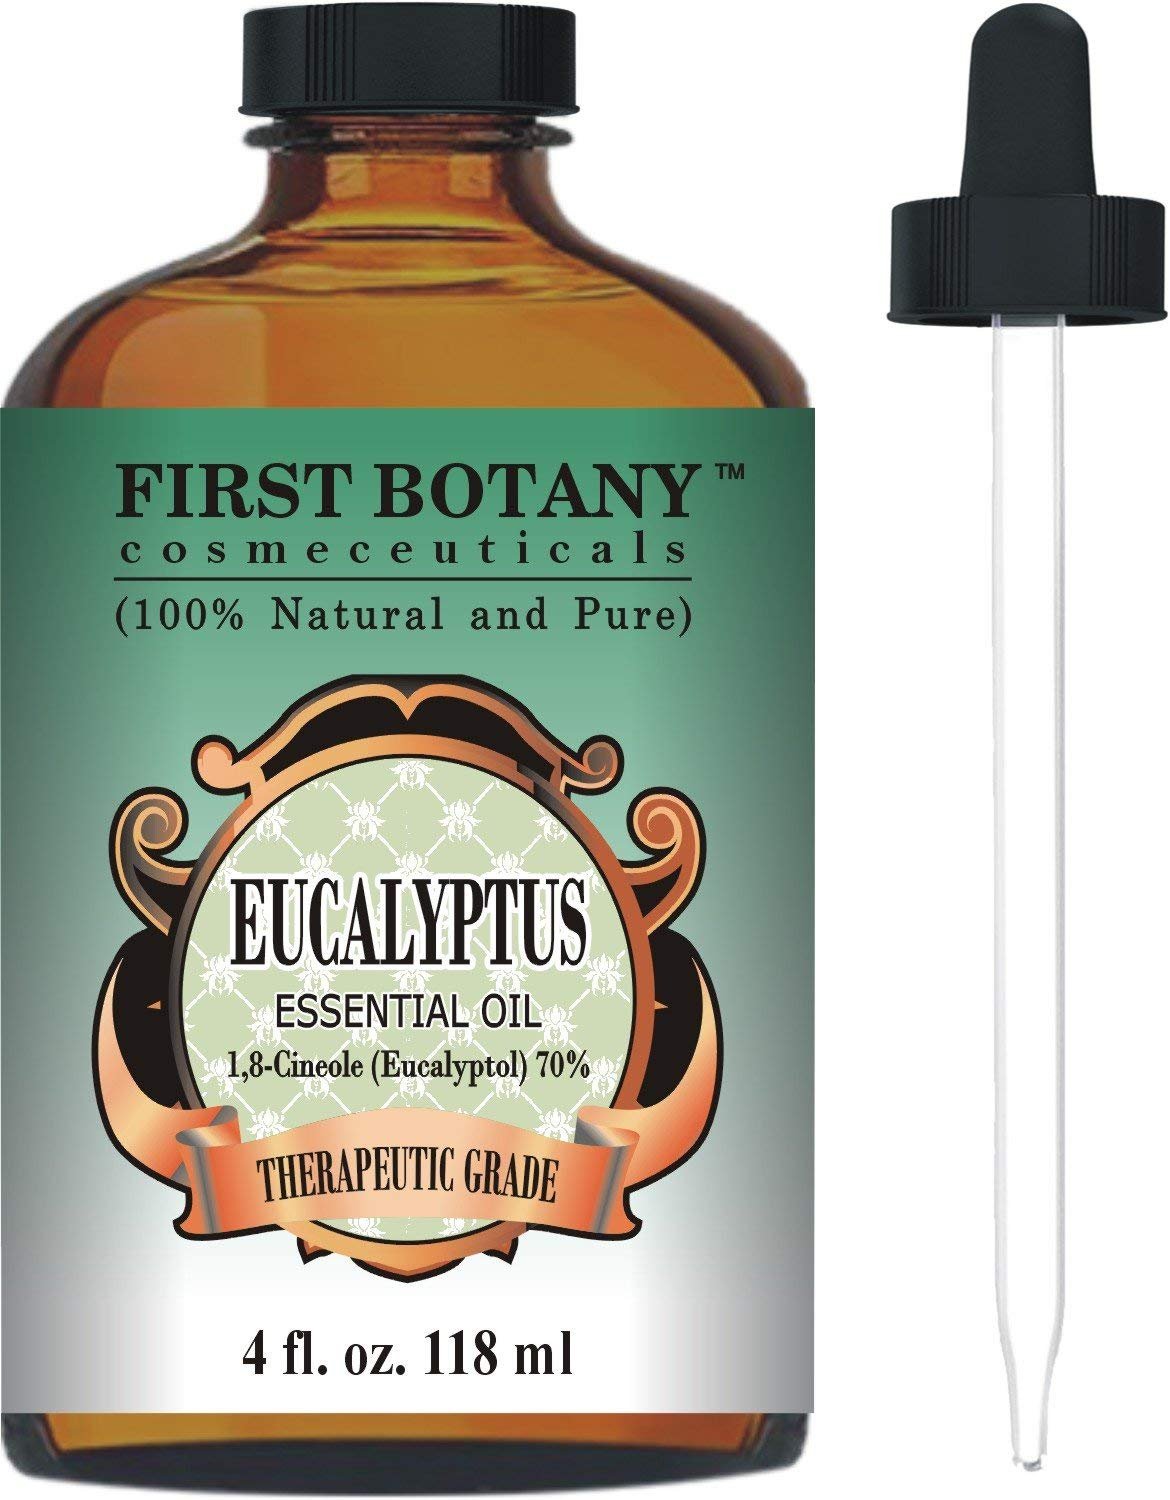 100% Pure and Natural Eucalyptus Essential Oil - 4 fl oz